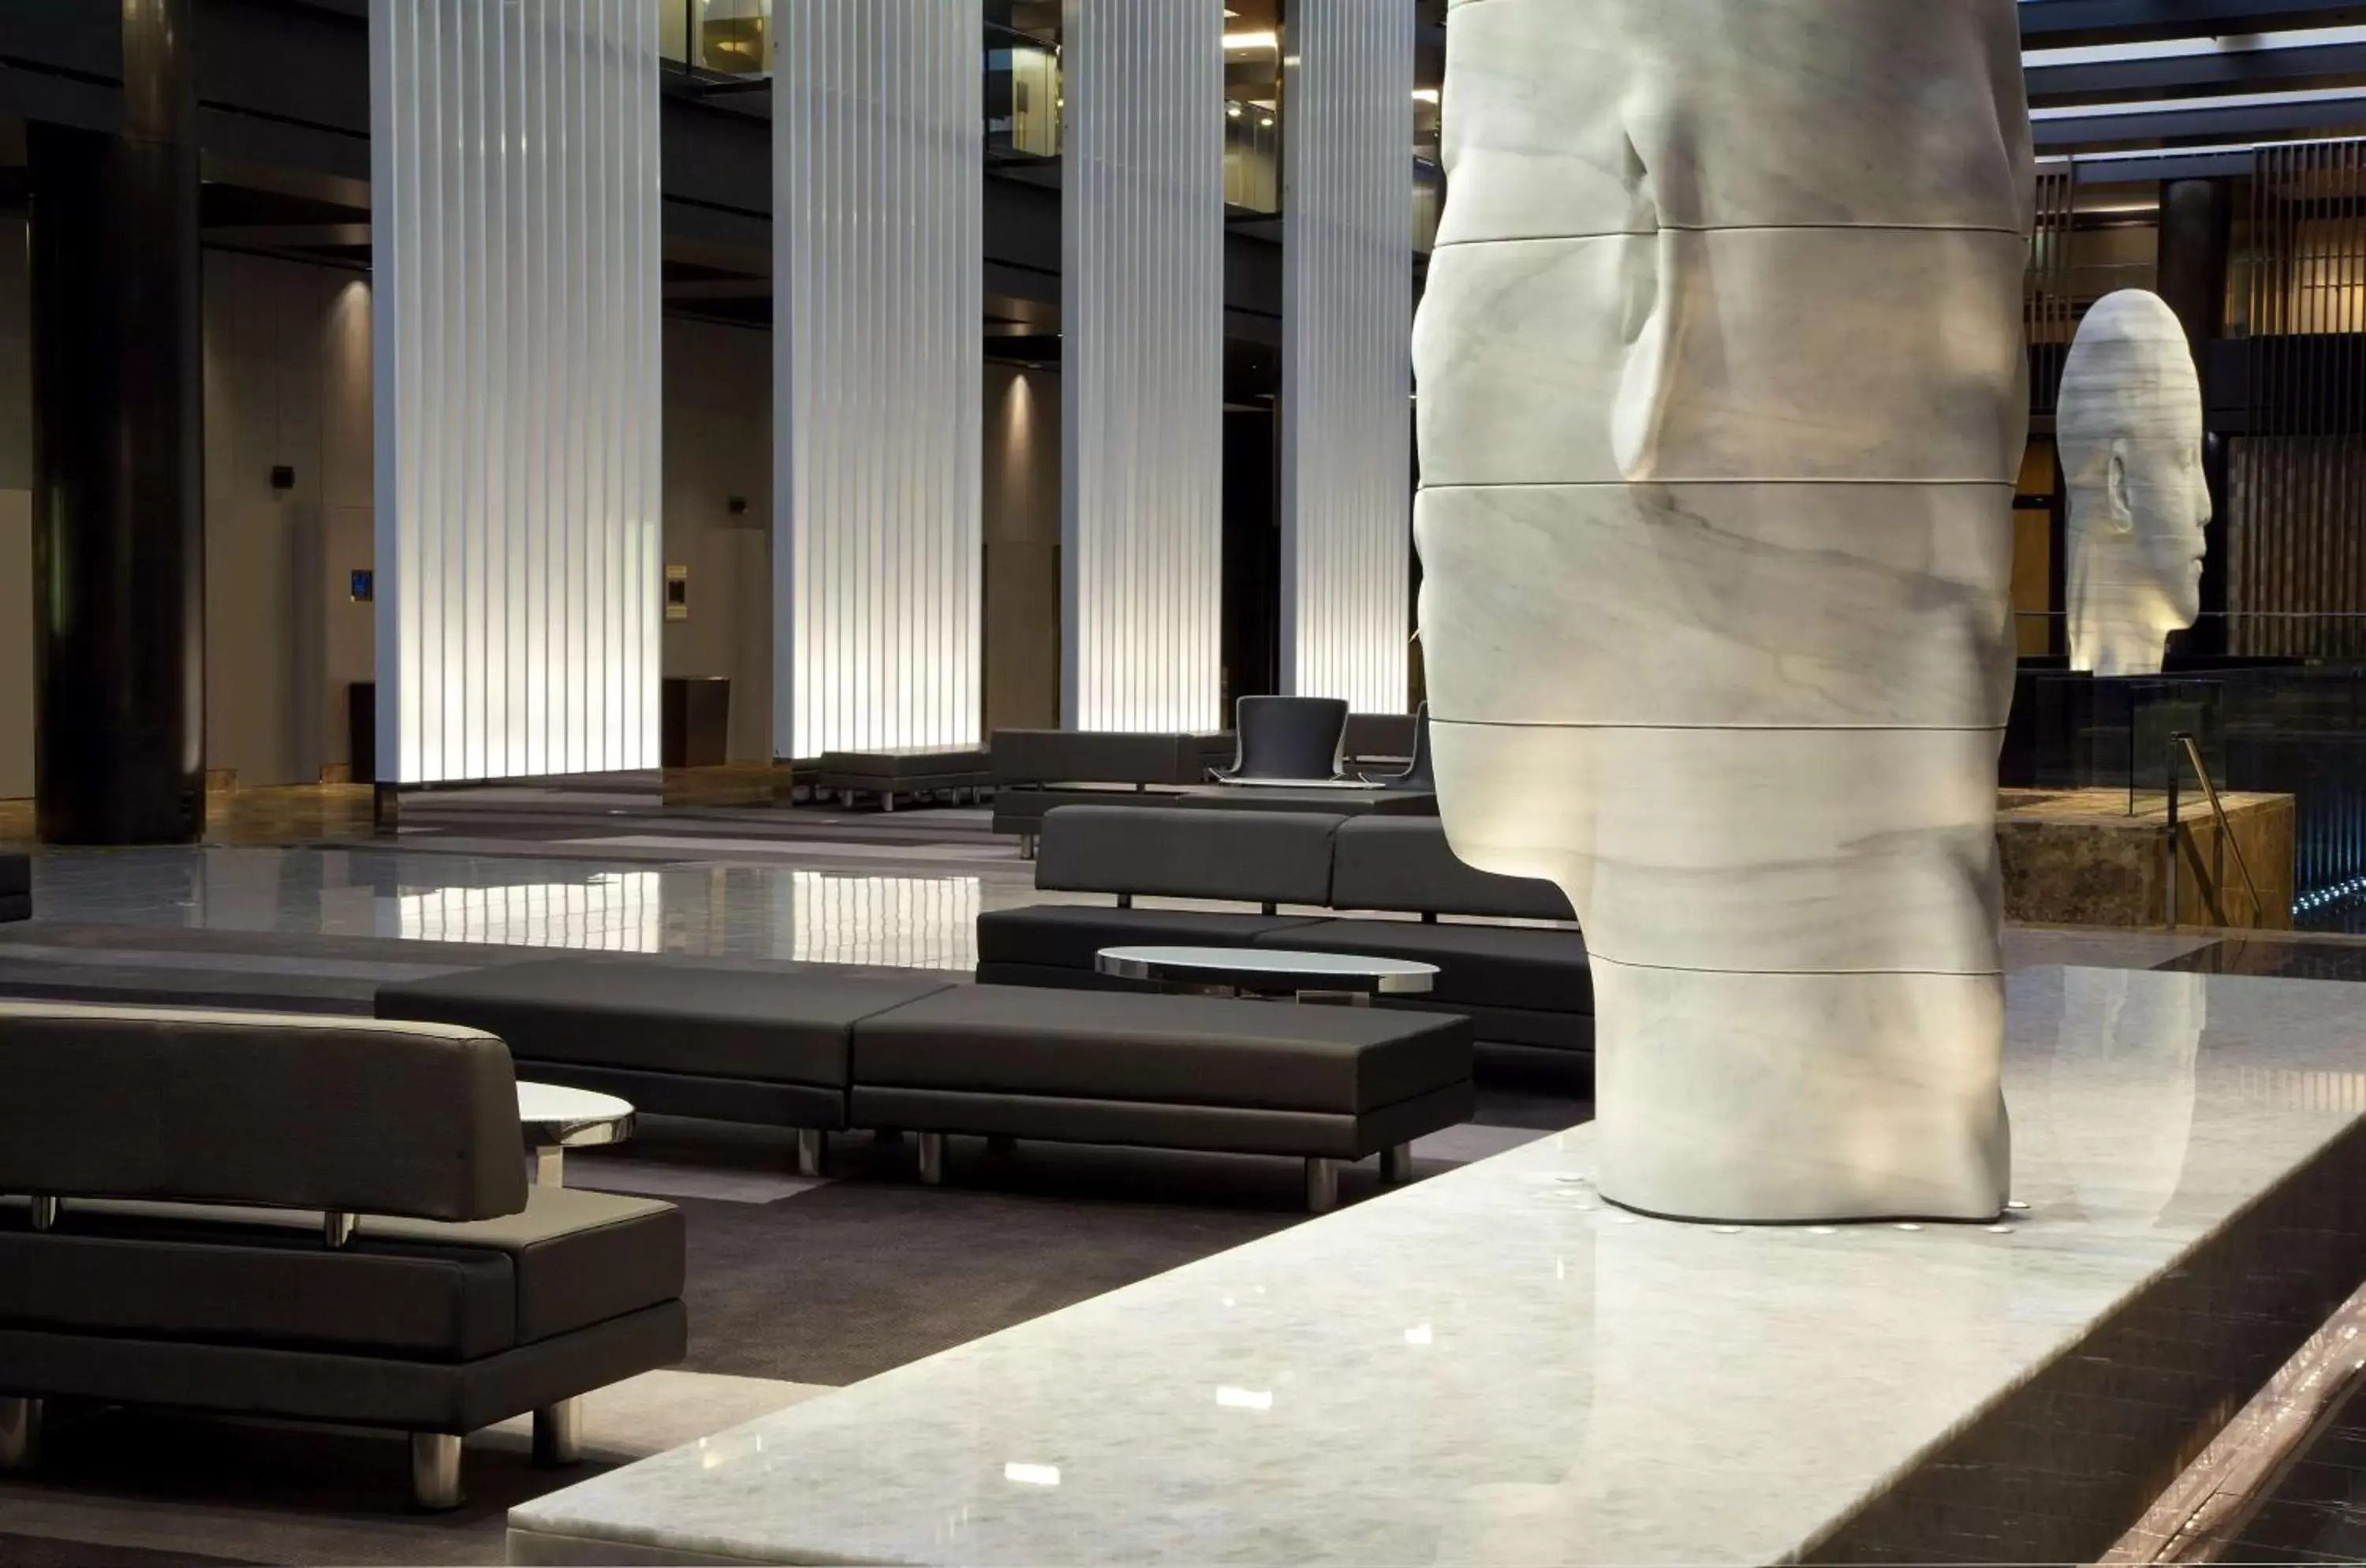 Lobby or reception in Hyatt Grand Central New York